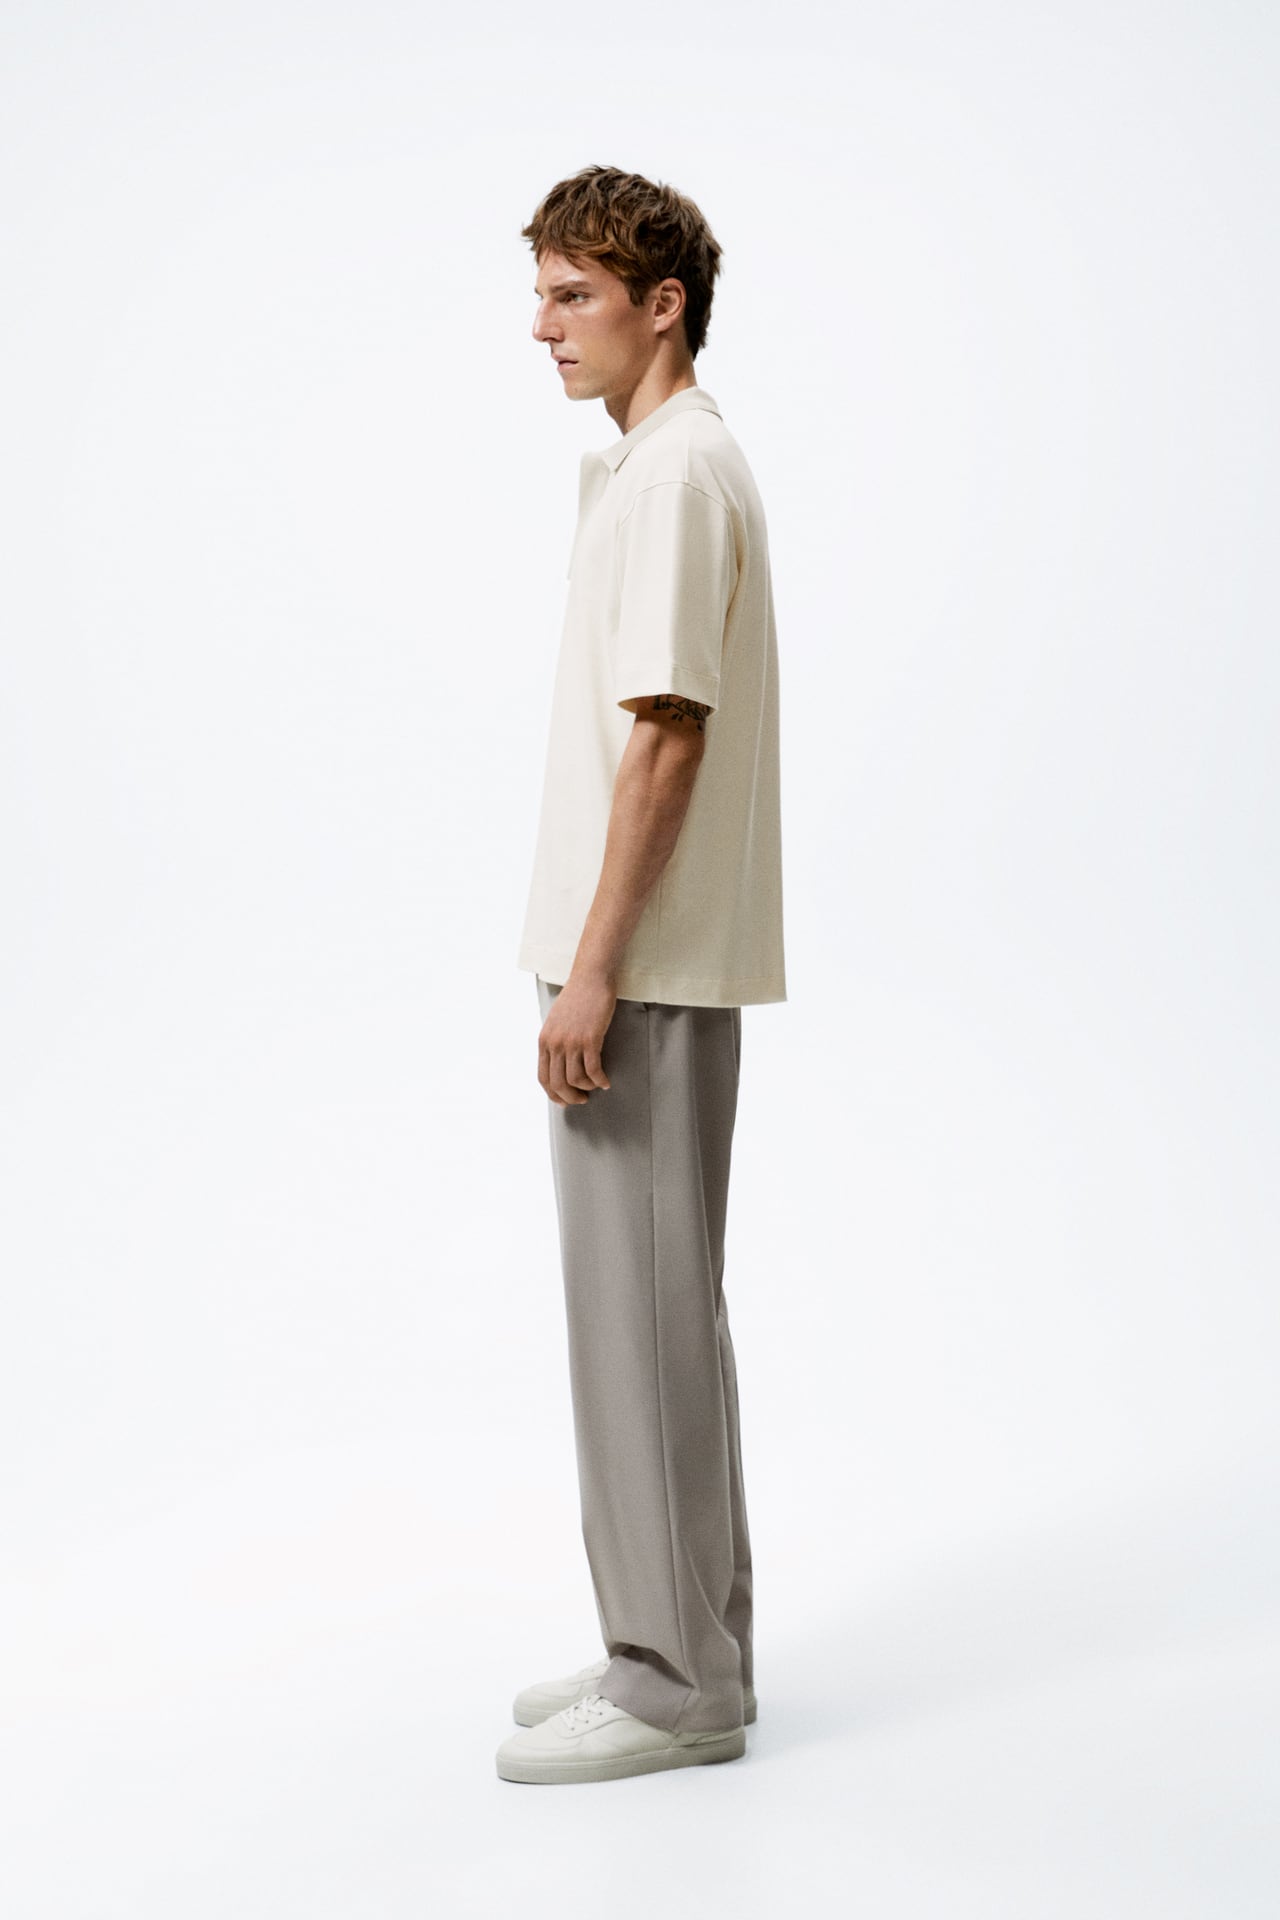 Zara - Knit Cotton Polo Shirt - Oyster White - Men